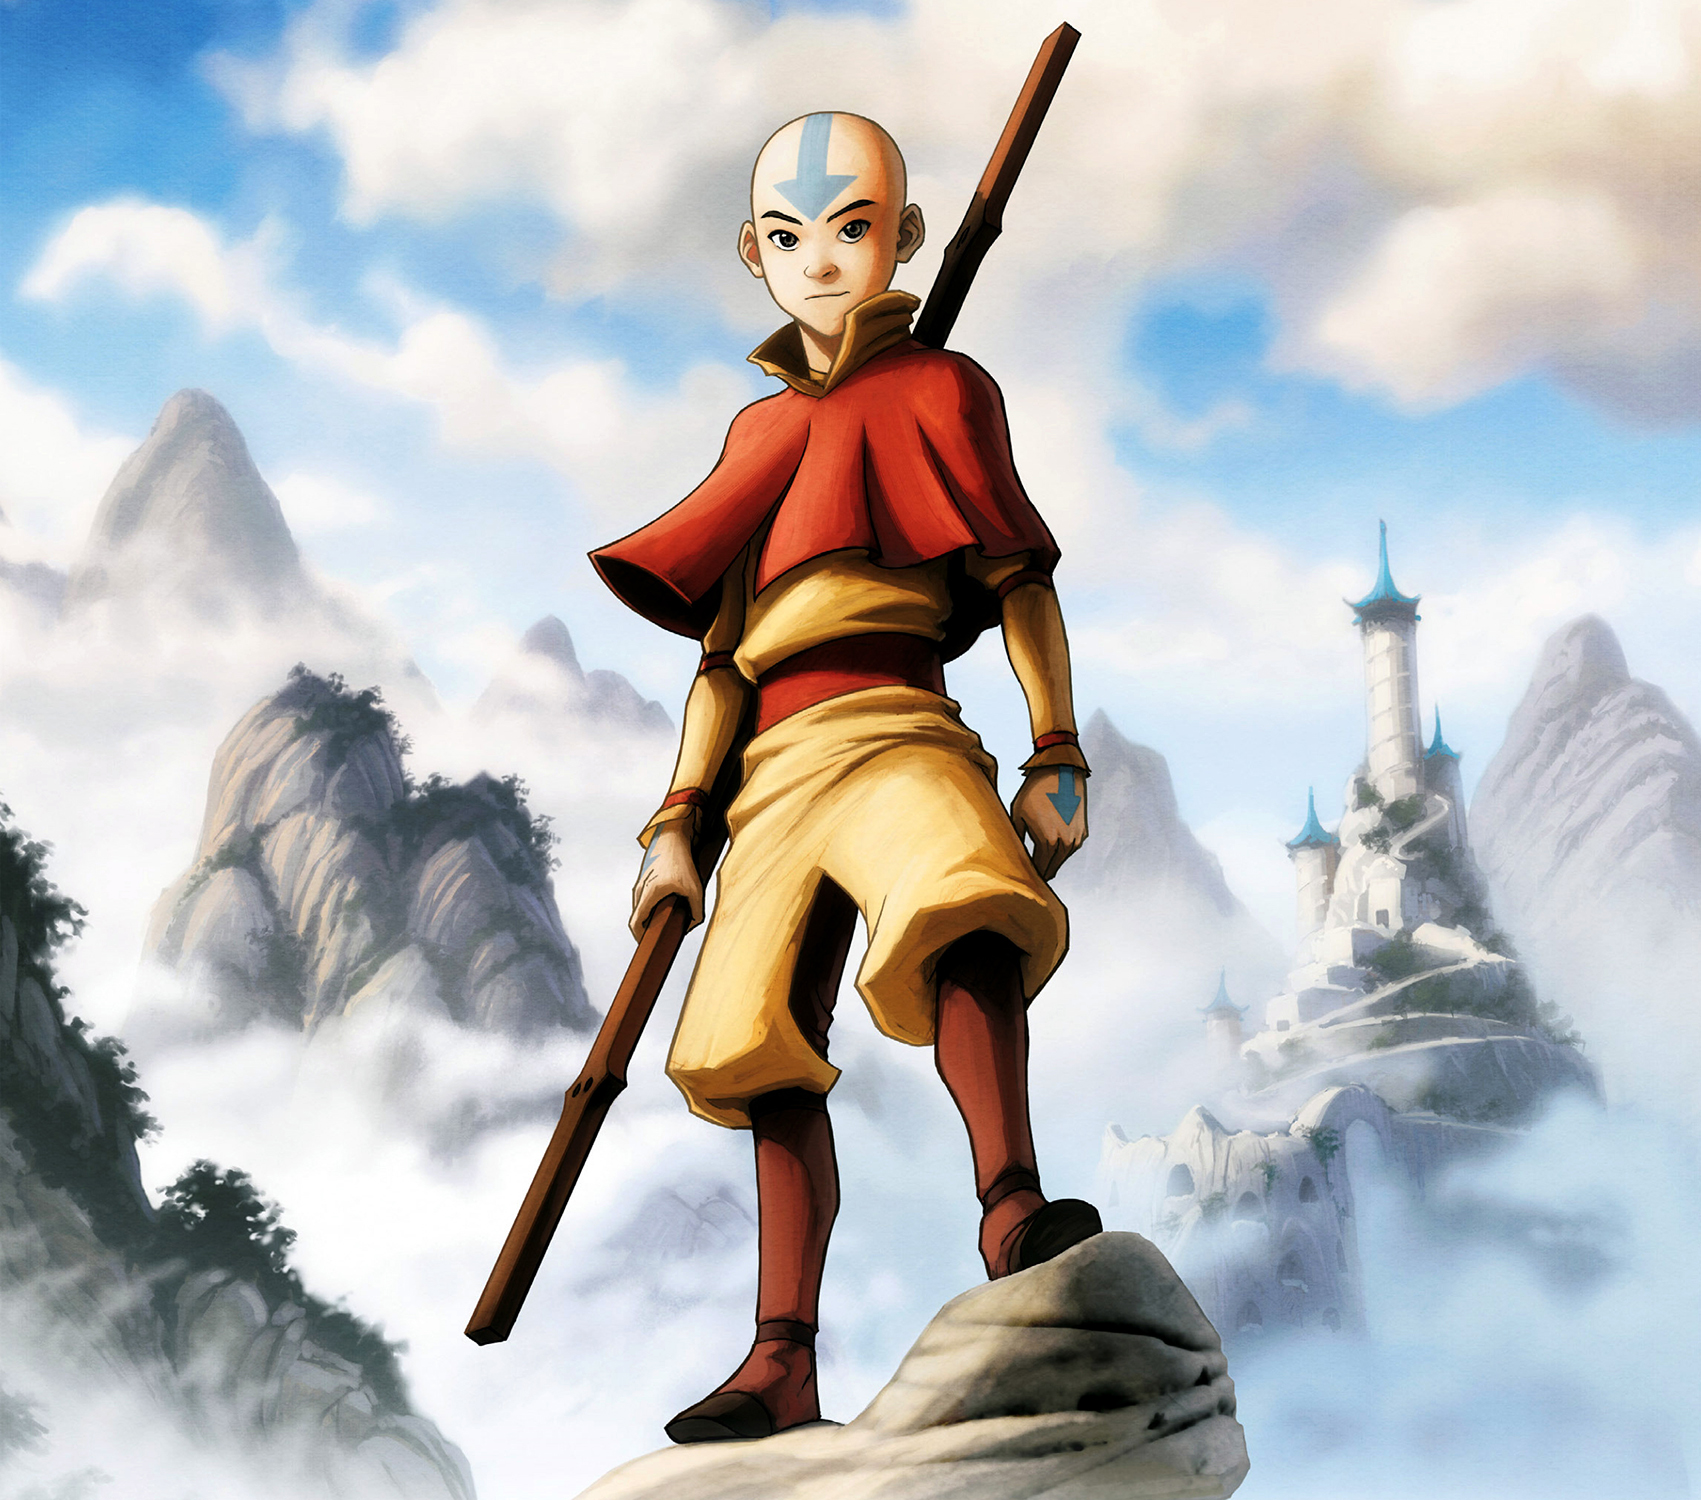 Avatar Aang The Last Airbender Image Avatar Mod Db